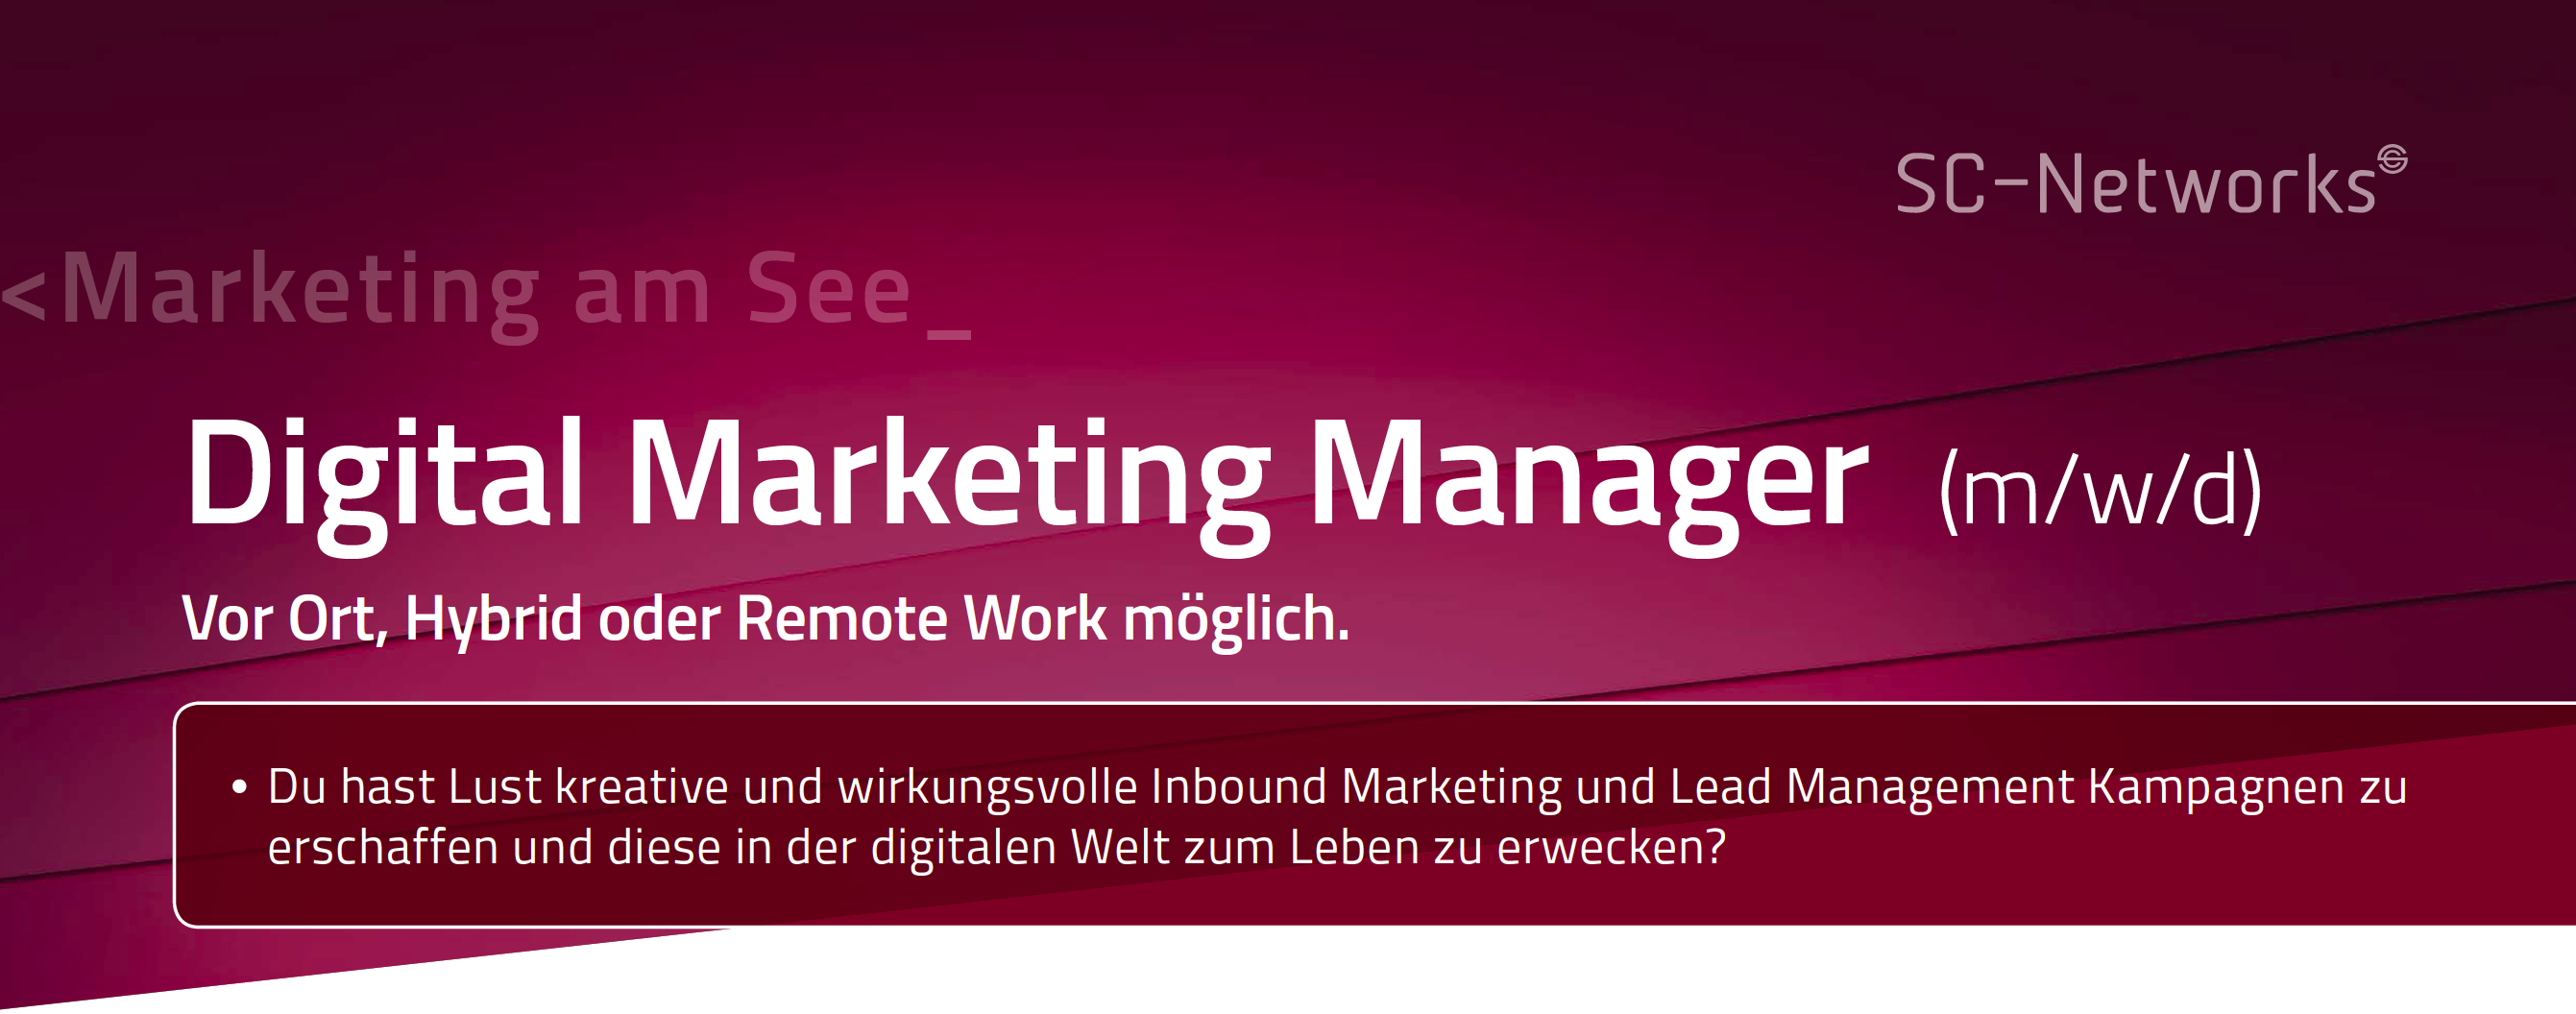 Digital Marketing Manager (m/w/d)